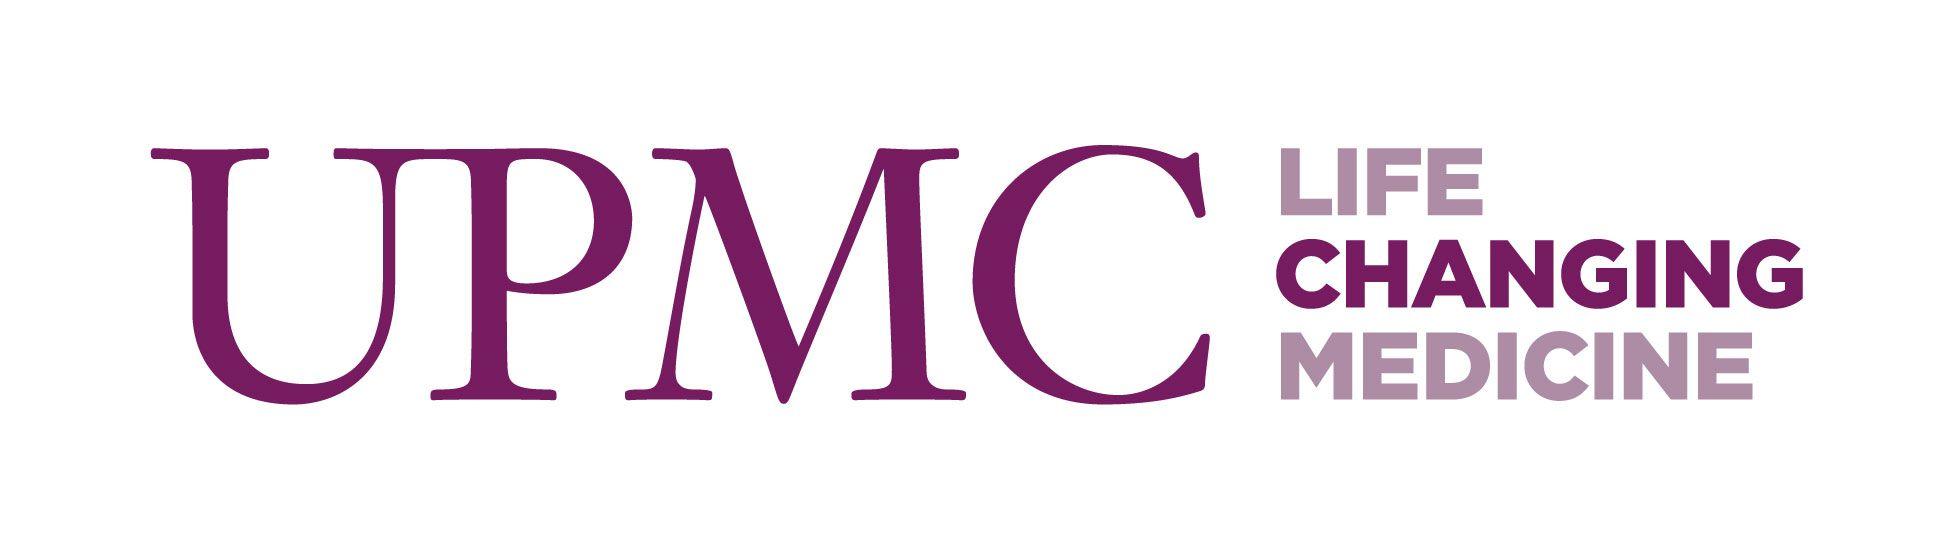 UPMC Logo - UPMC Logo Color In Jpg : Tissuepathology.com